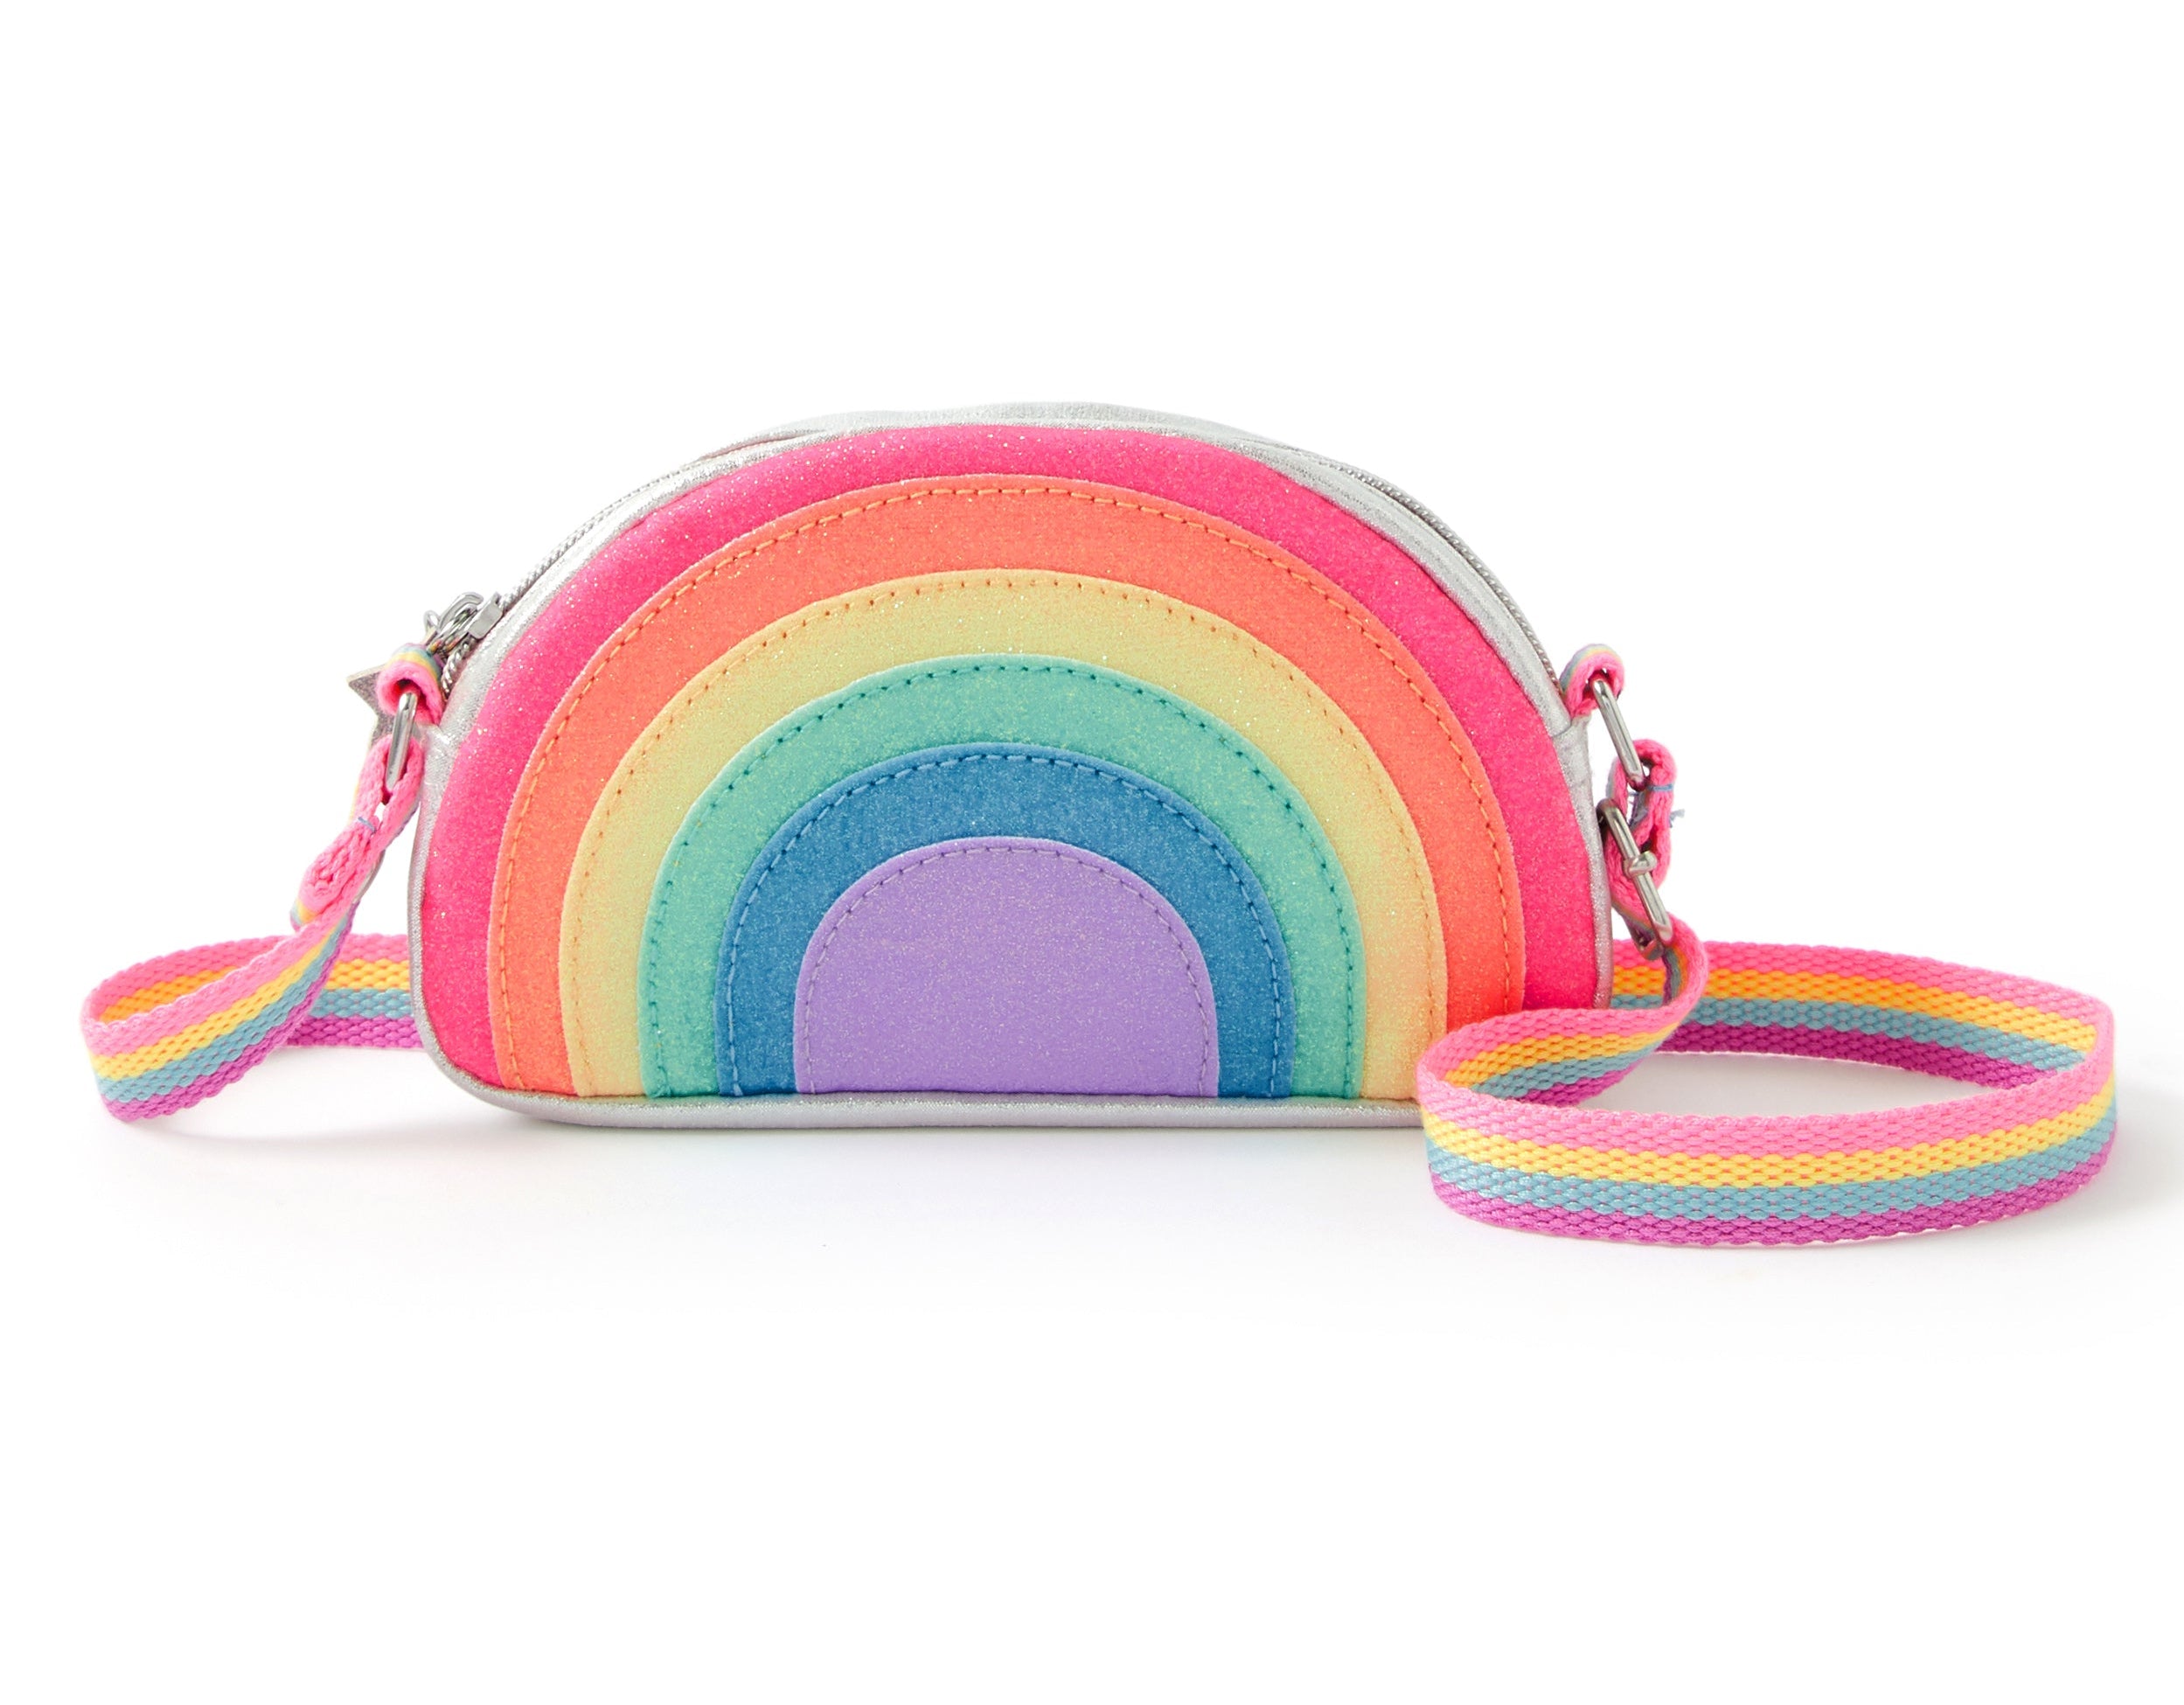 Accessorize London Rainbow Sparkle Across Body Bag